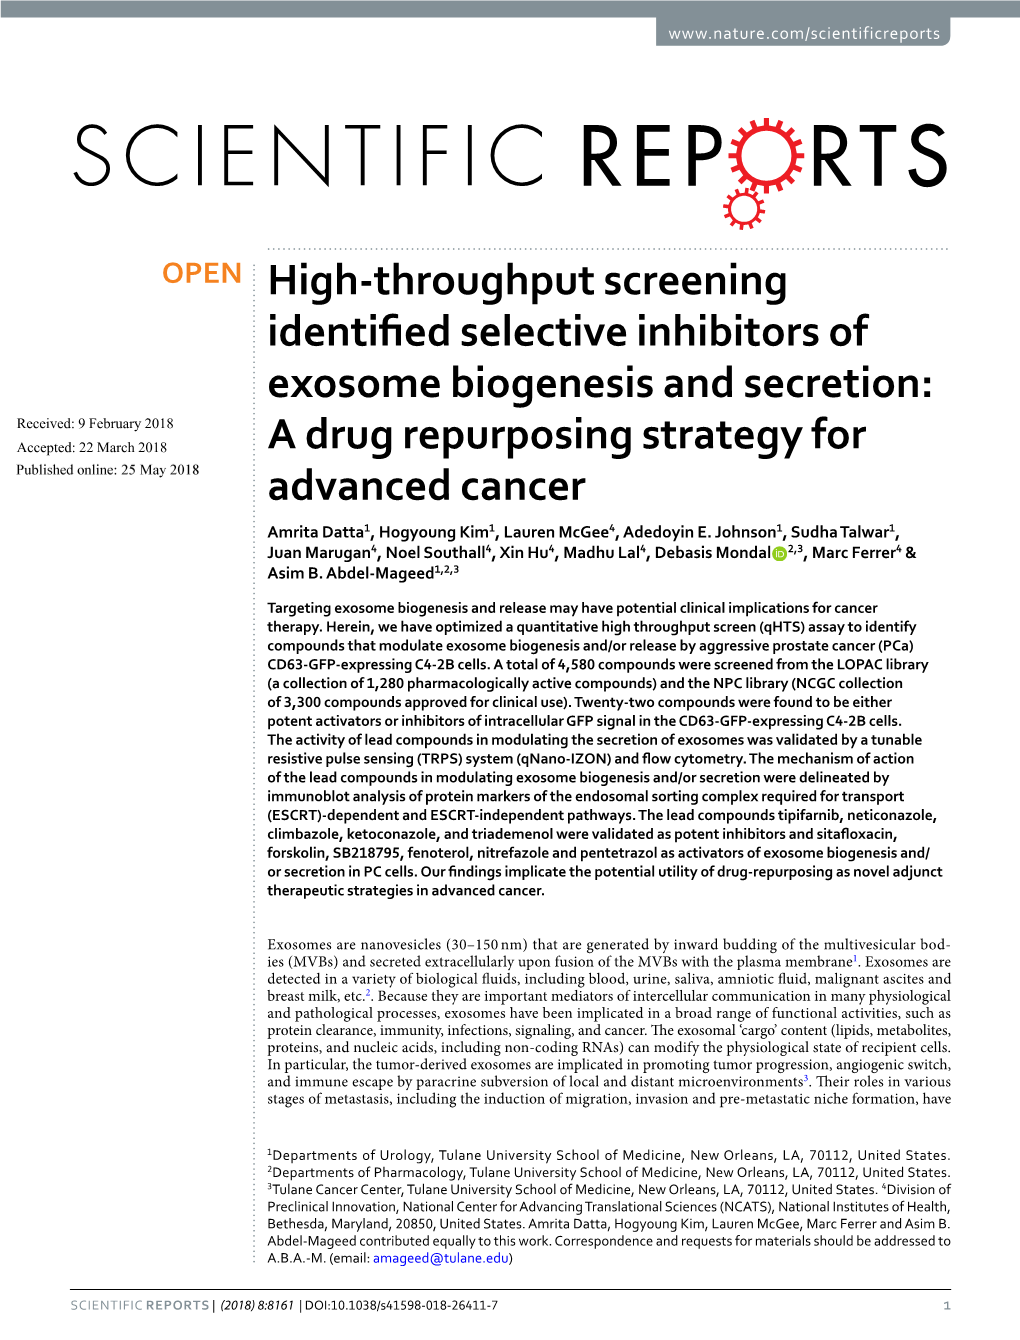 High-Throughput Screening Identified Selective Inhibitors Of